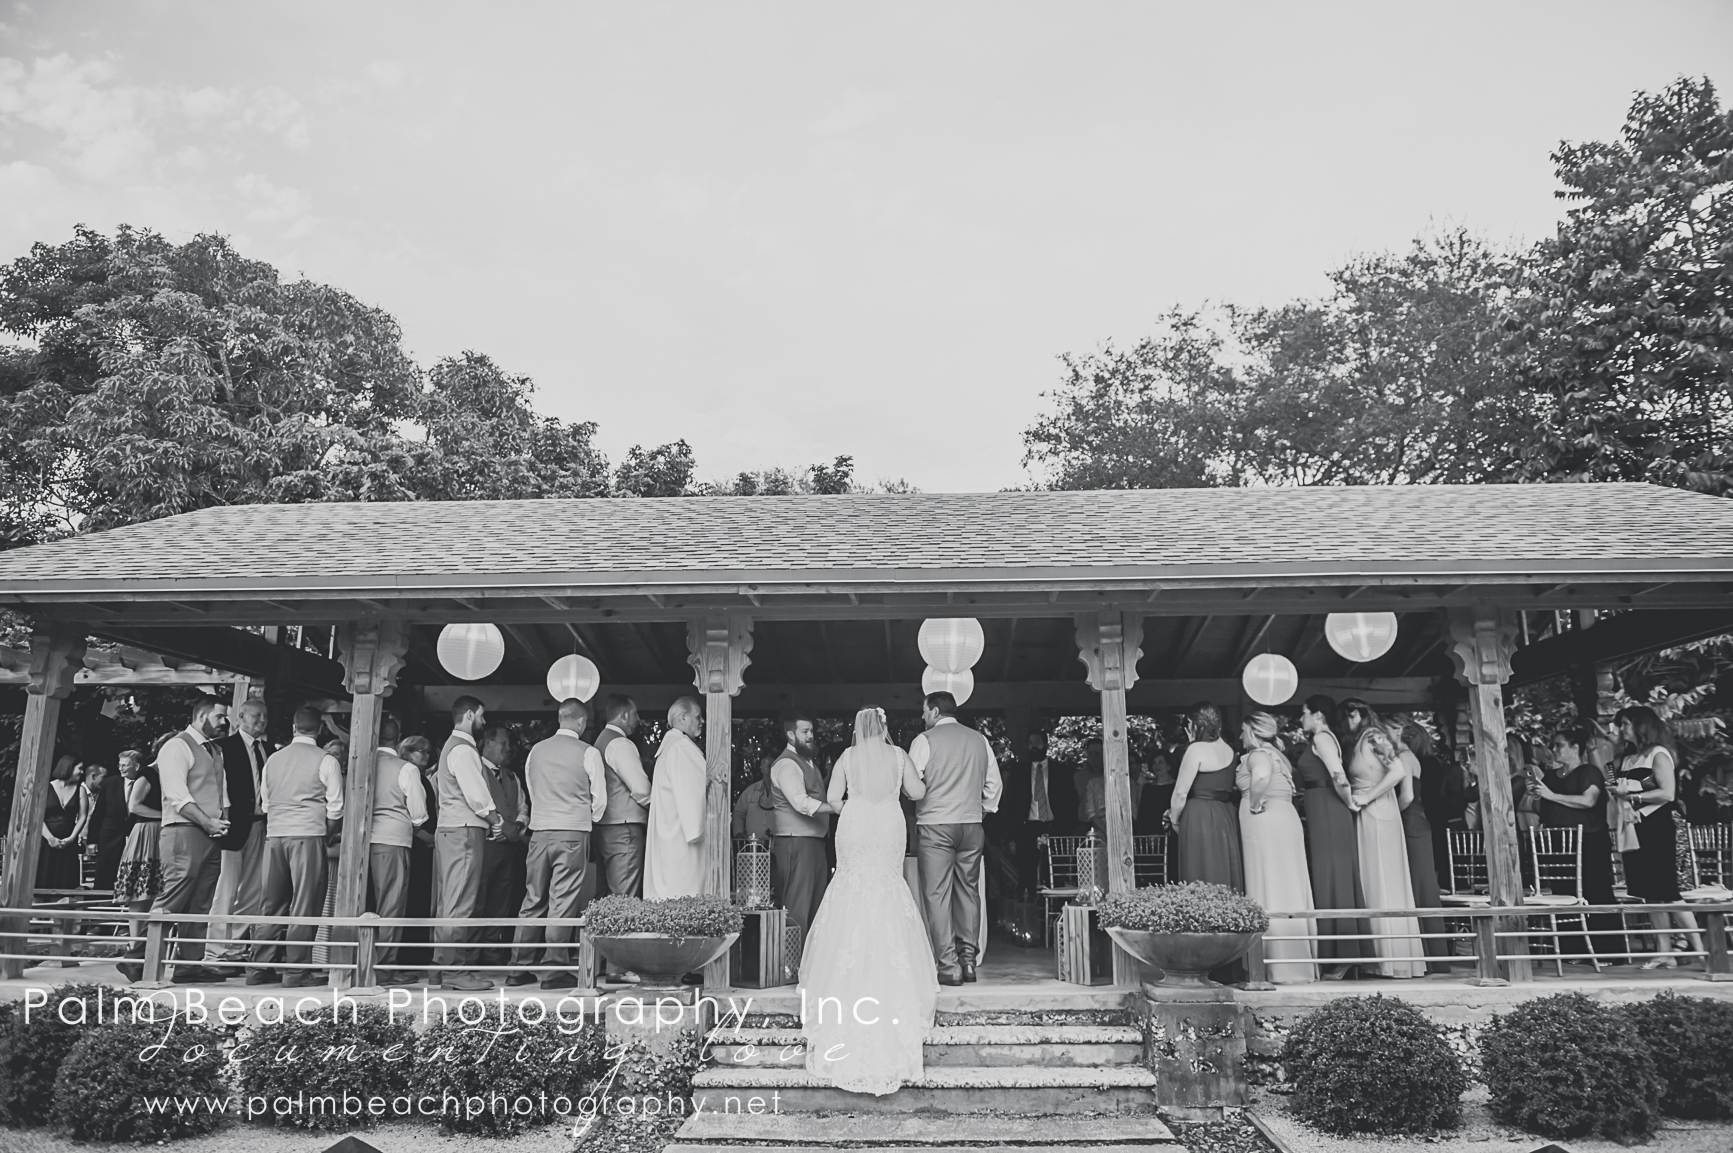 Redland Koi Gardens Wedding by Palm Beach Photography, Inc.